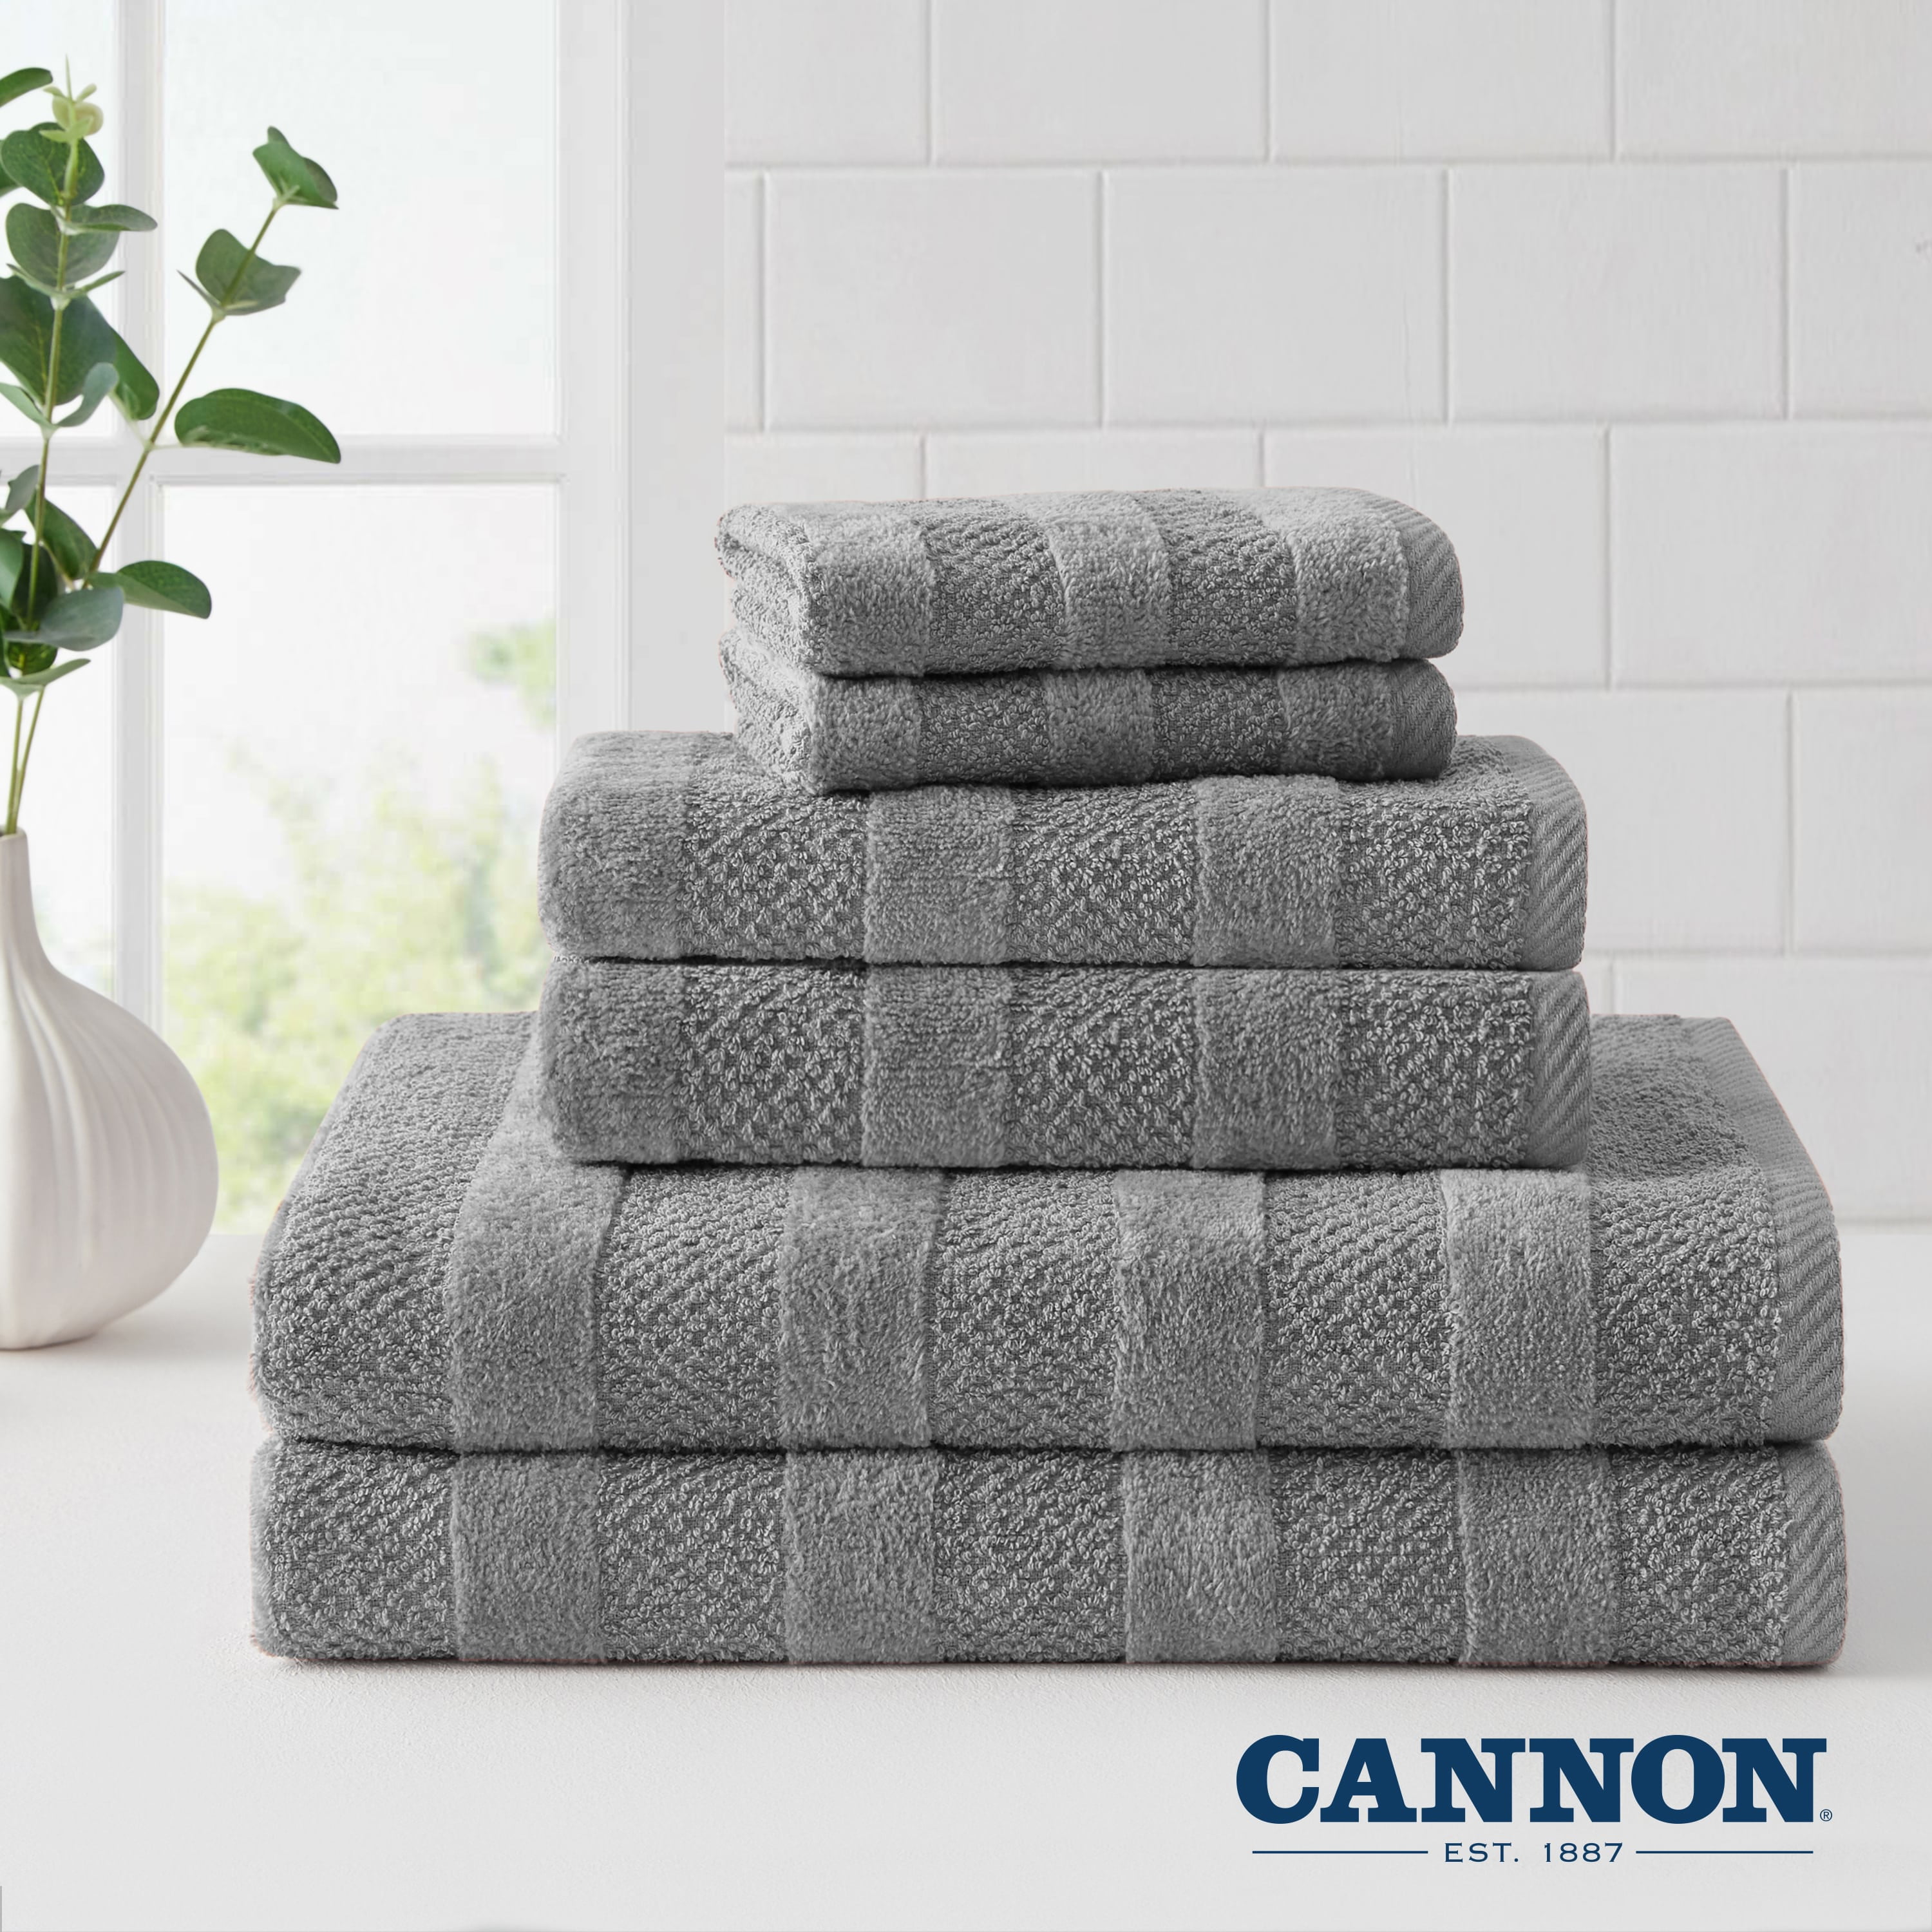 Cannon bath towels : r/comicsans